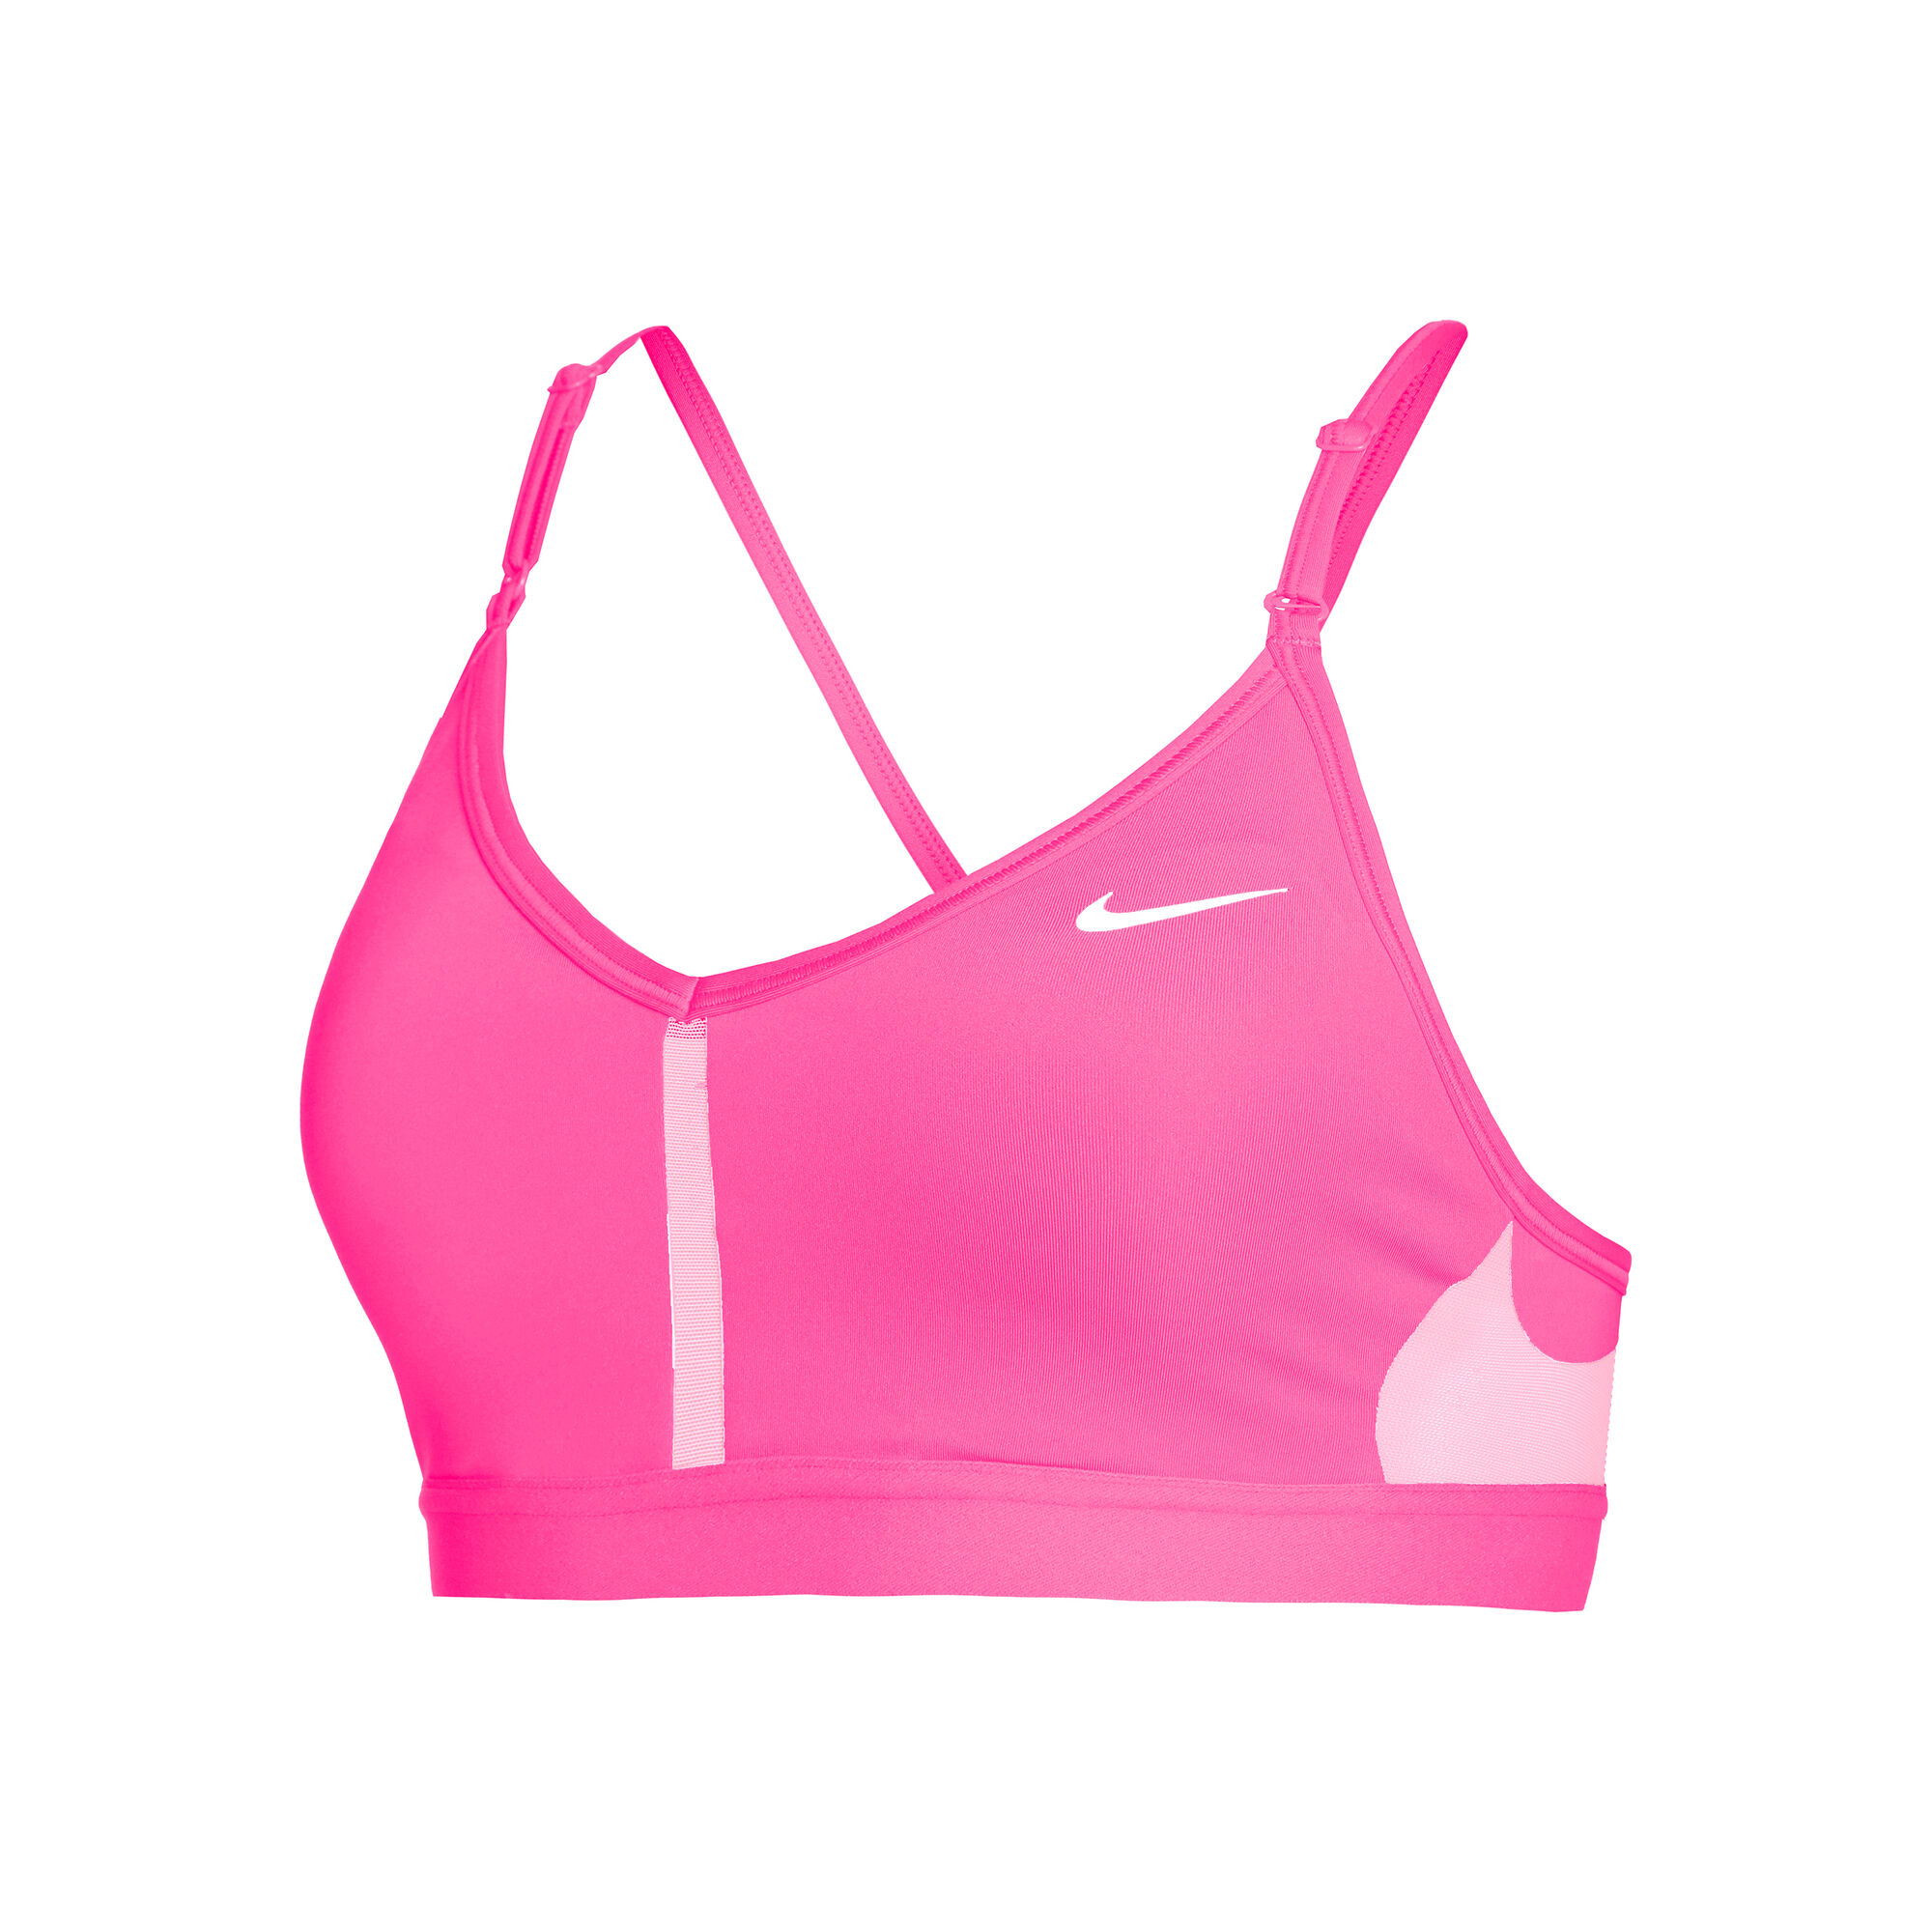 Hot Pink Nike Sports Bra